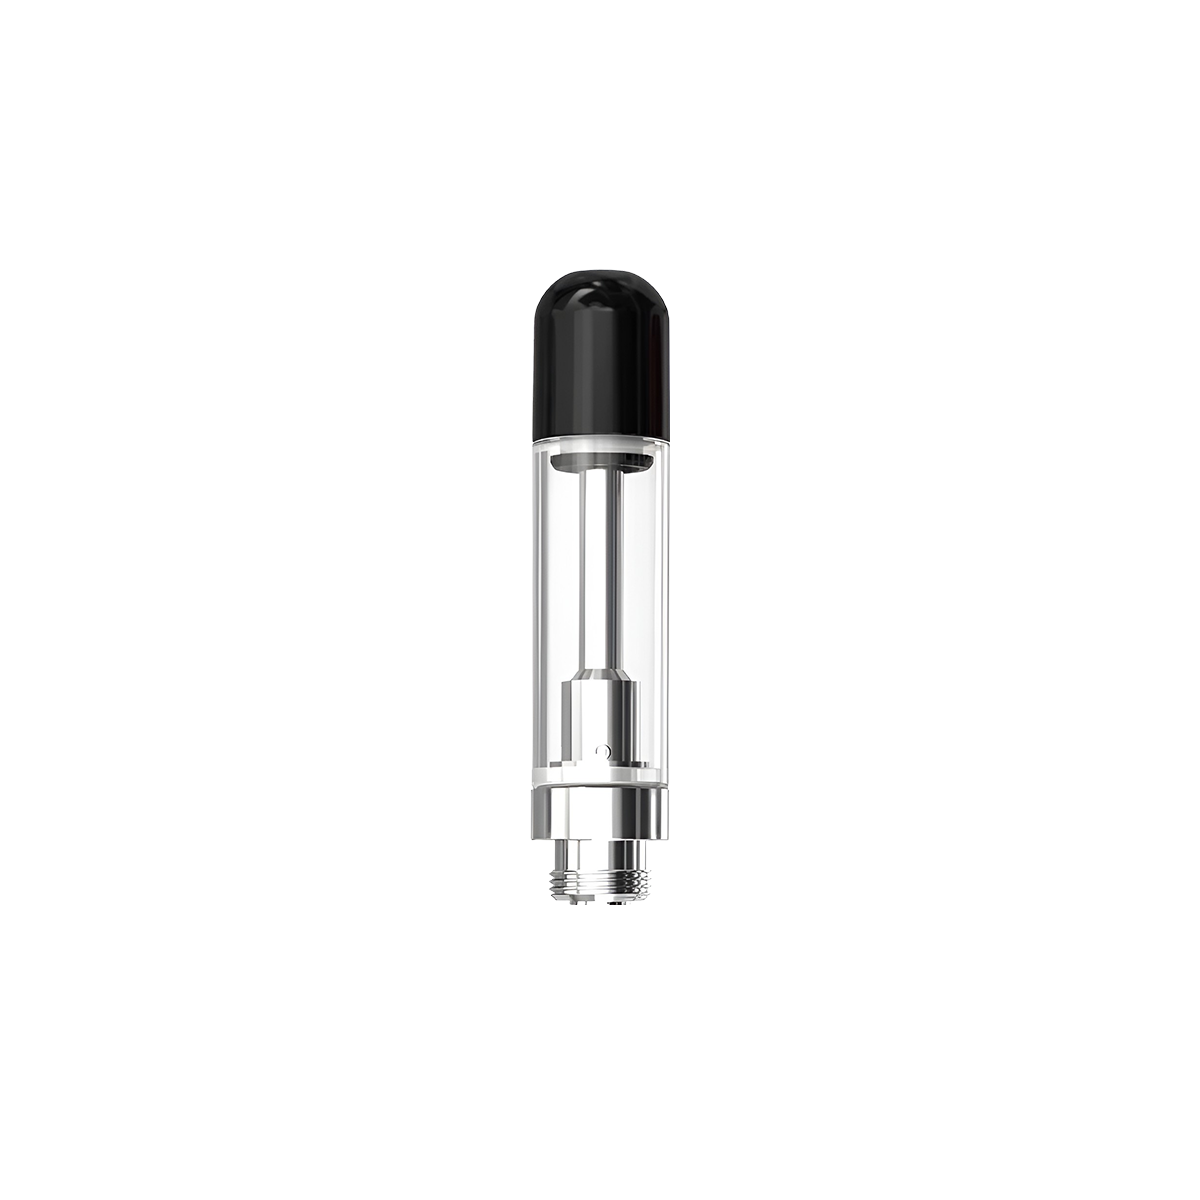 Joyetech Eroll Mac Replacement Pods Cartridge 0.55 Ml Black / 1.5 Ω Coil 